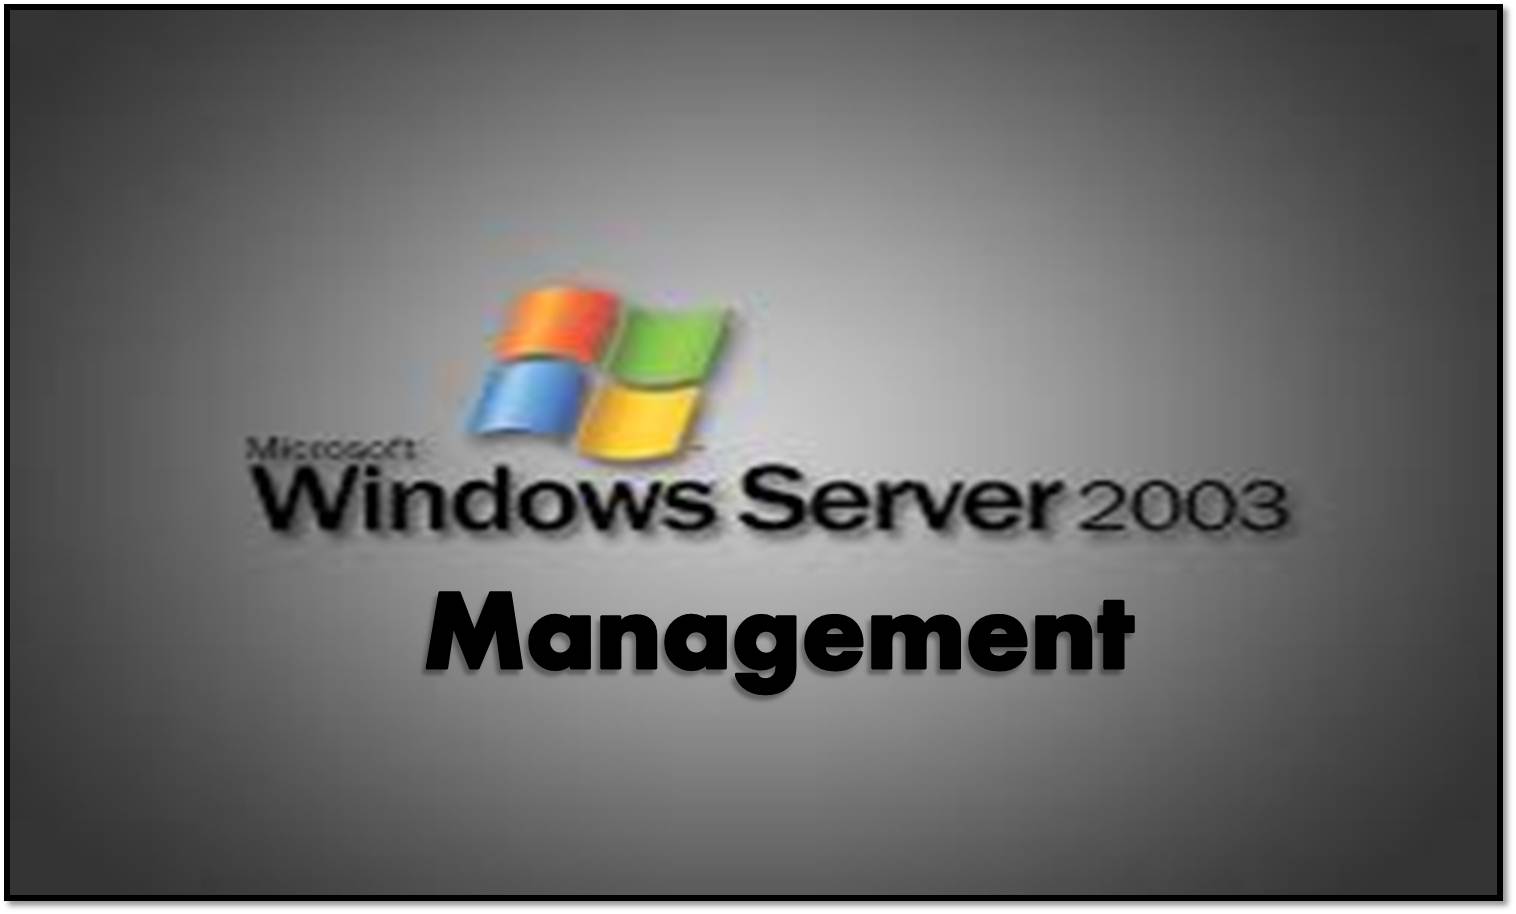 http://study.aisectonline.com/images/Windows 2003 Server Management.jpg